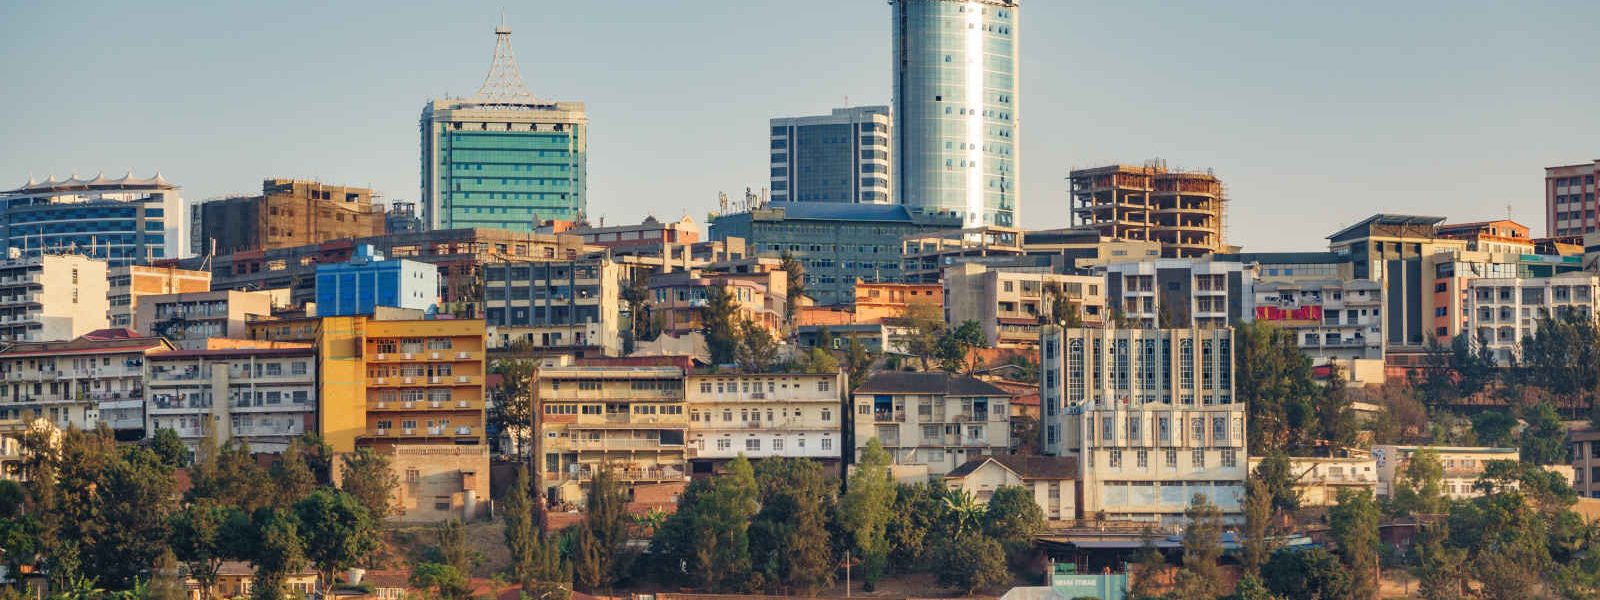 Skyline, Kigali, Rwanda